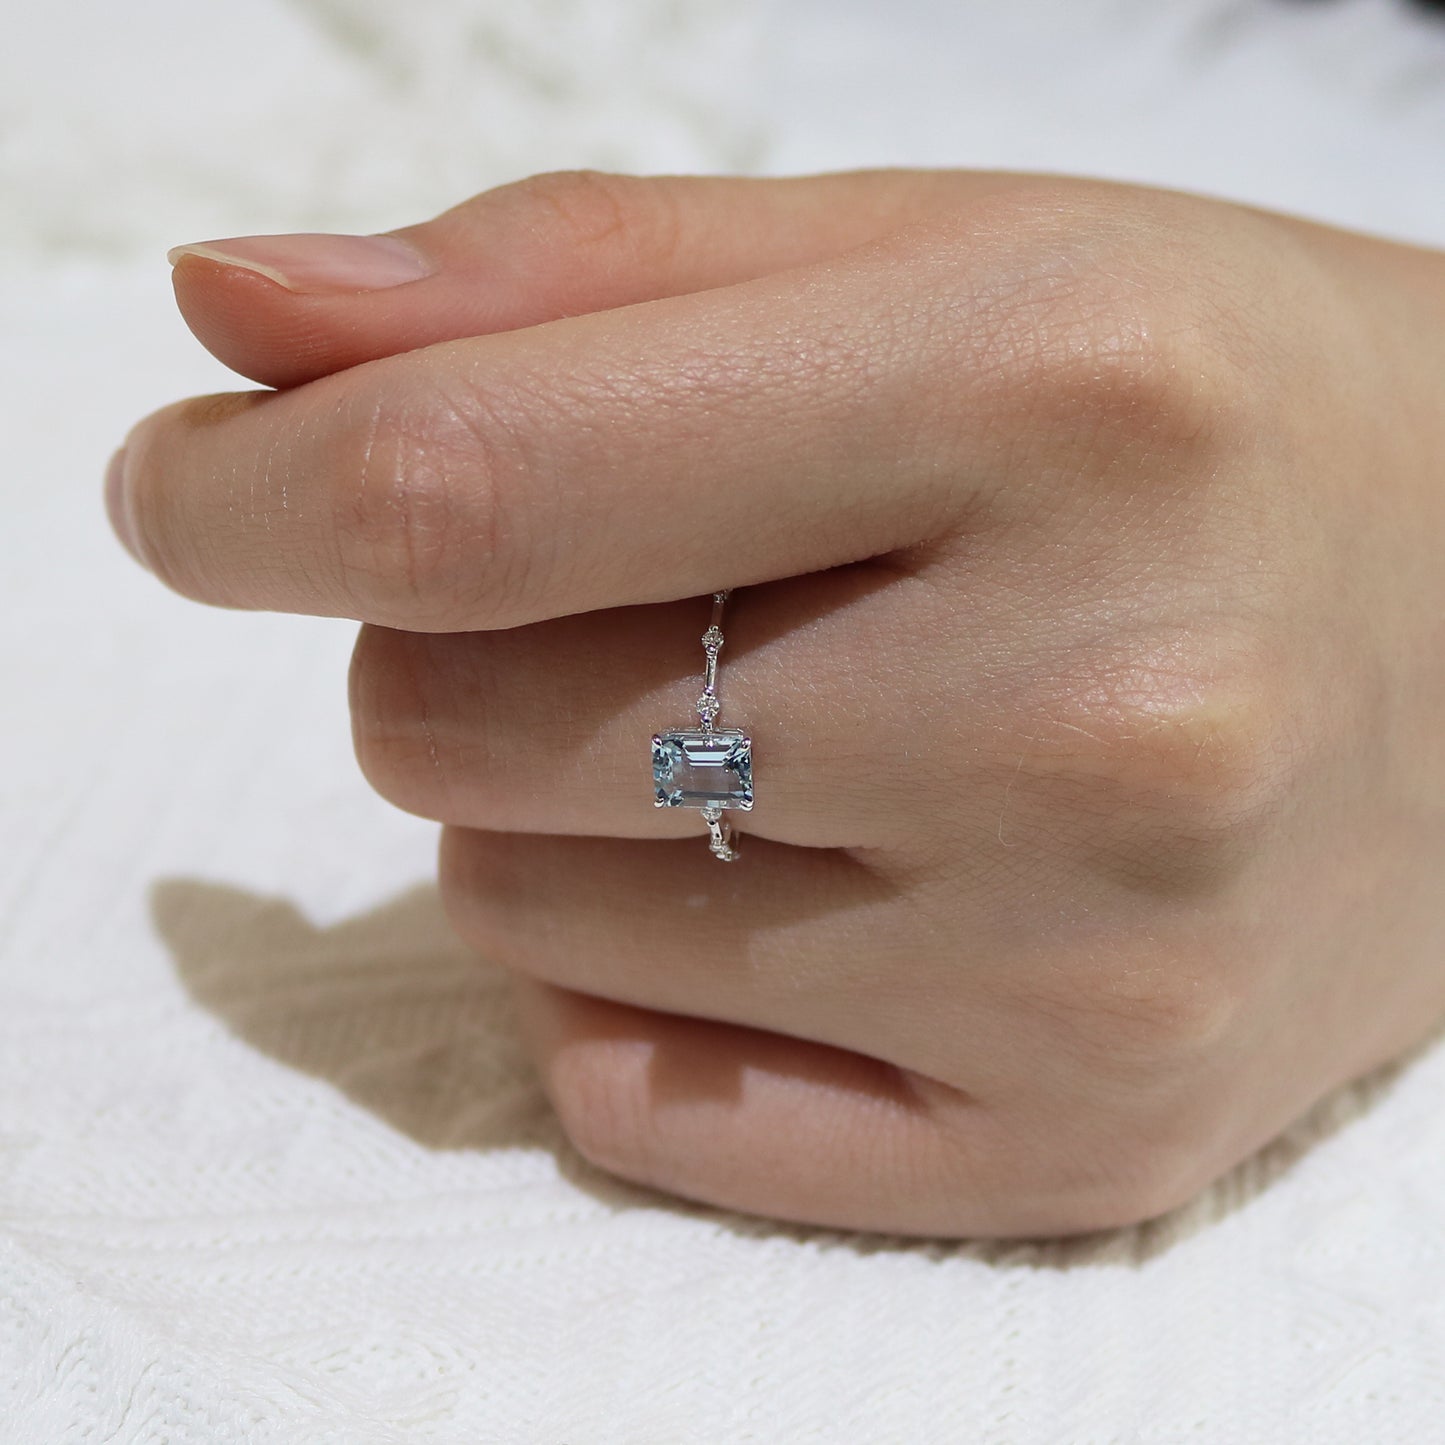  18k白金海藍寶鑽石戒指在中指上 18k White Gold Emerald-cut Aquamarine Diamond Ring on middle finger